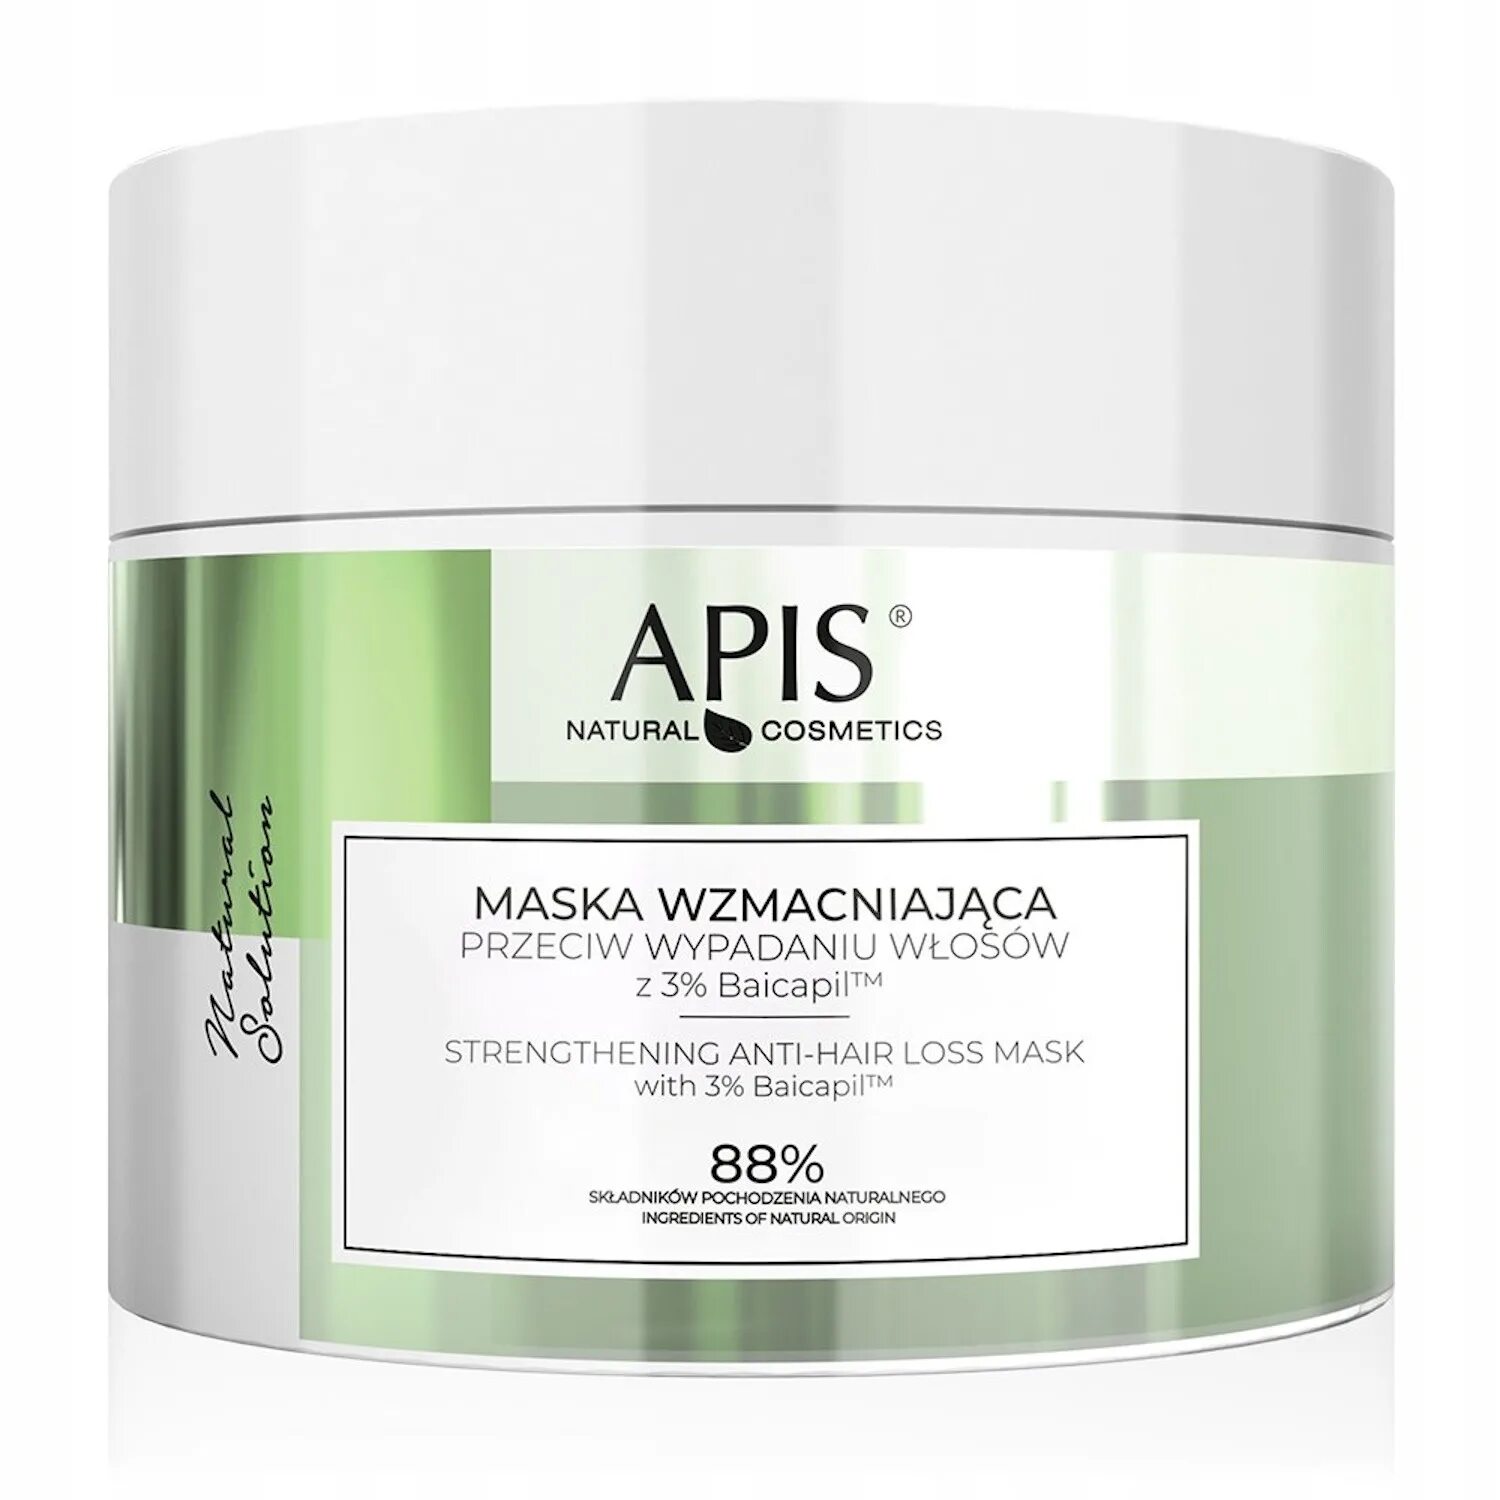 APIS косметика. Маска для волос natural. Natural solutions маска. Anti hair loss Mask.